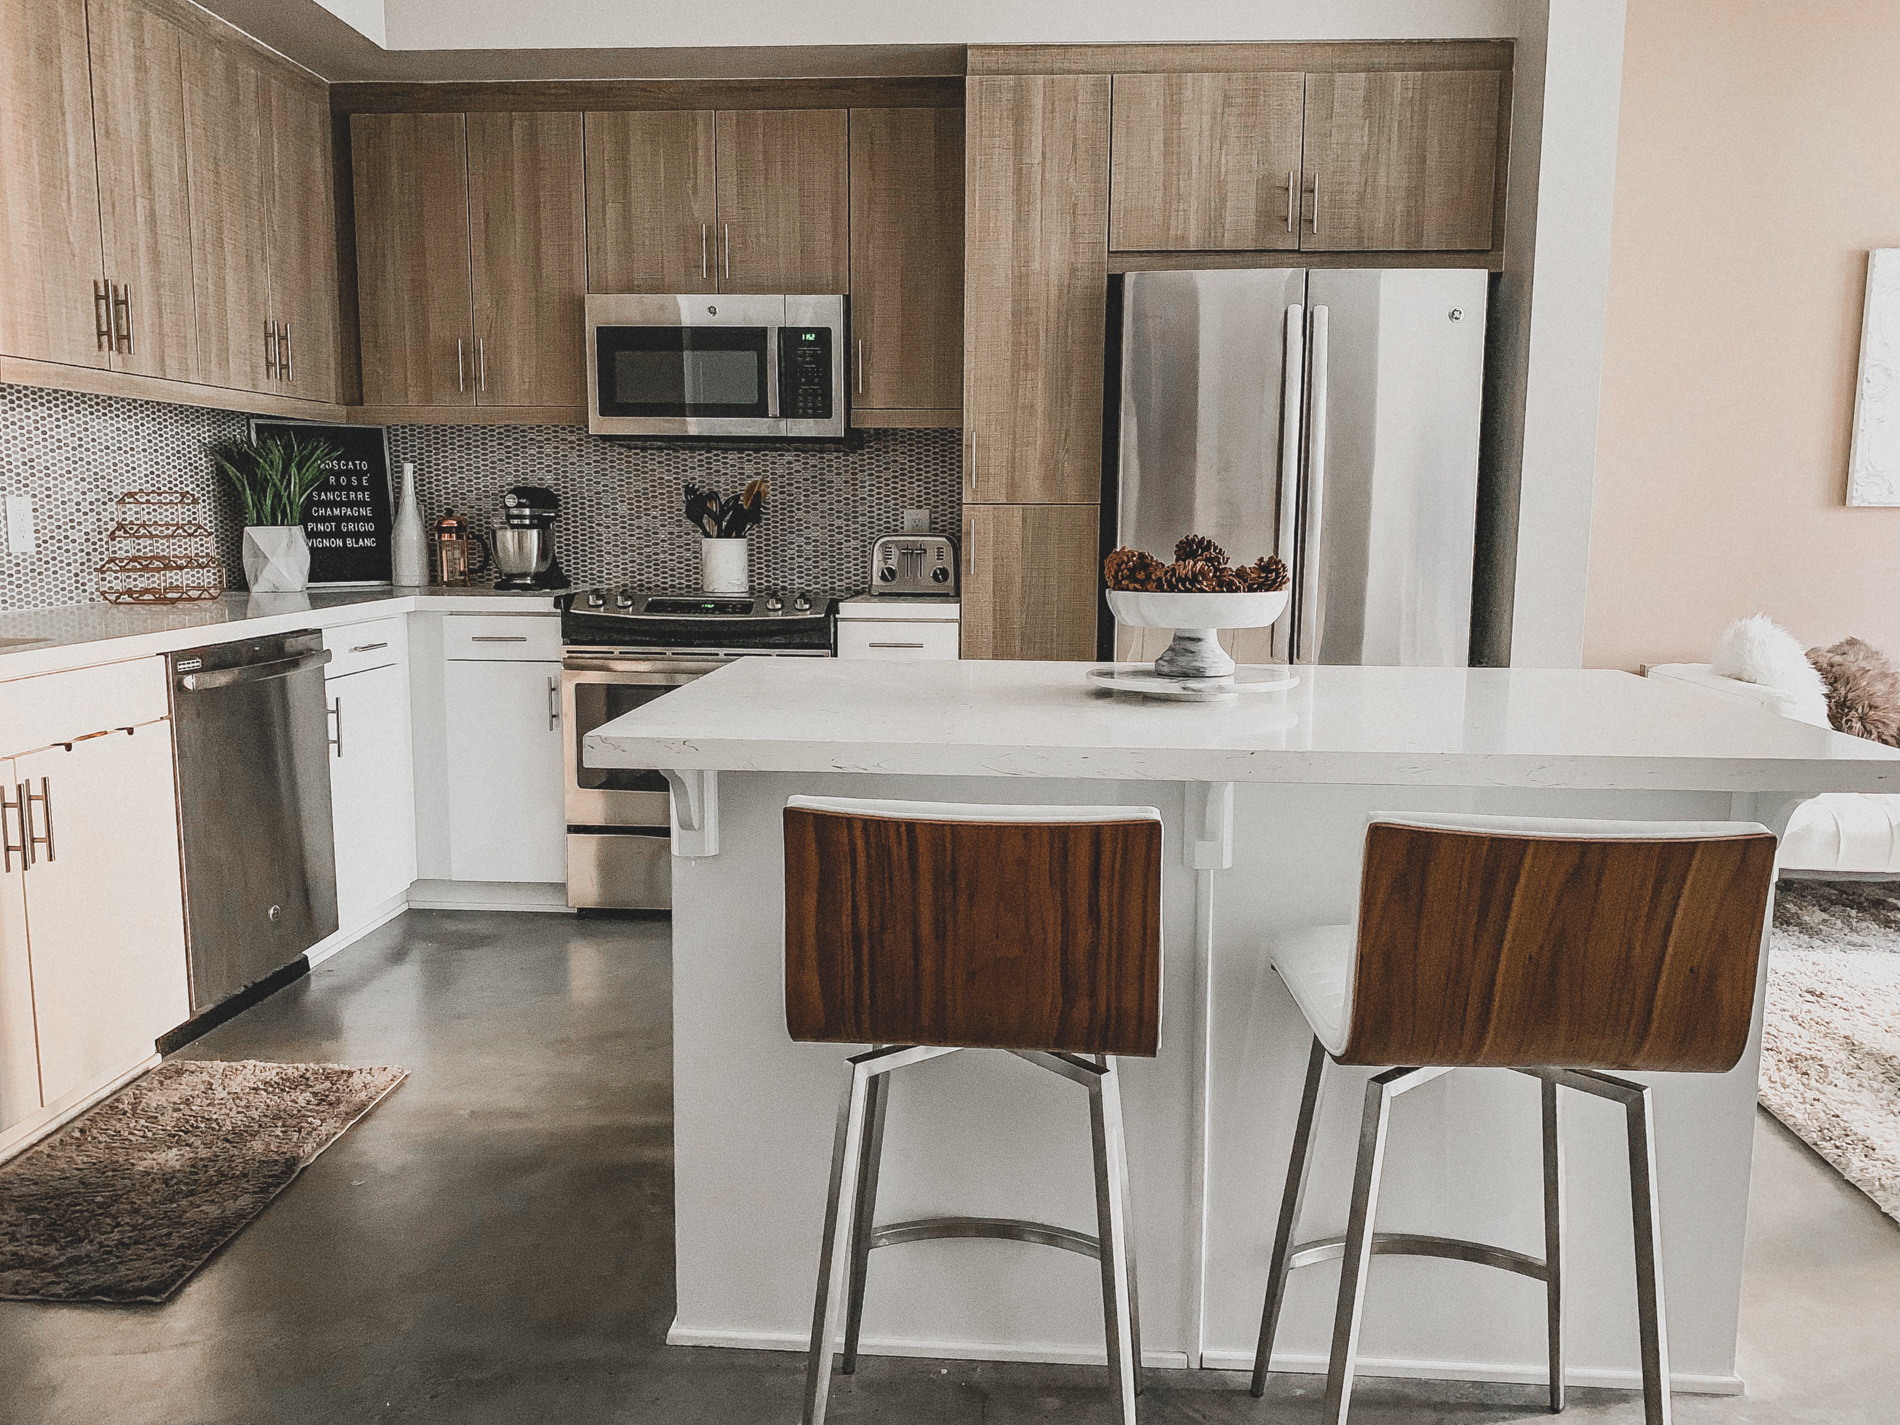 Modern Kitchen Decor | Marble & Wood Kitchen Decor | Home Decor | Apartment Decor | Blondie in the City by Hayley Larue